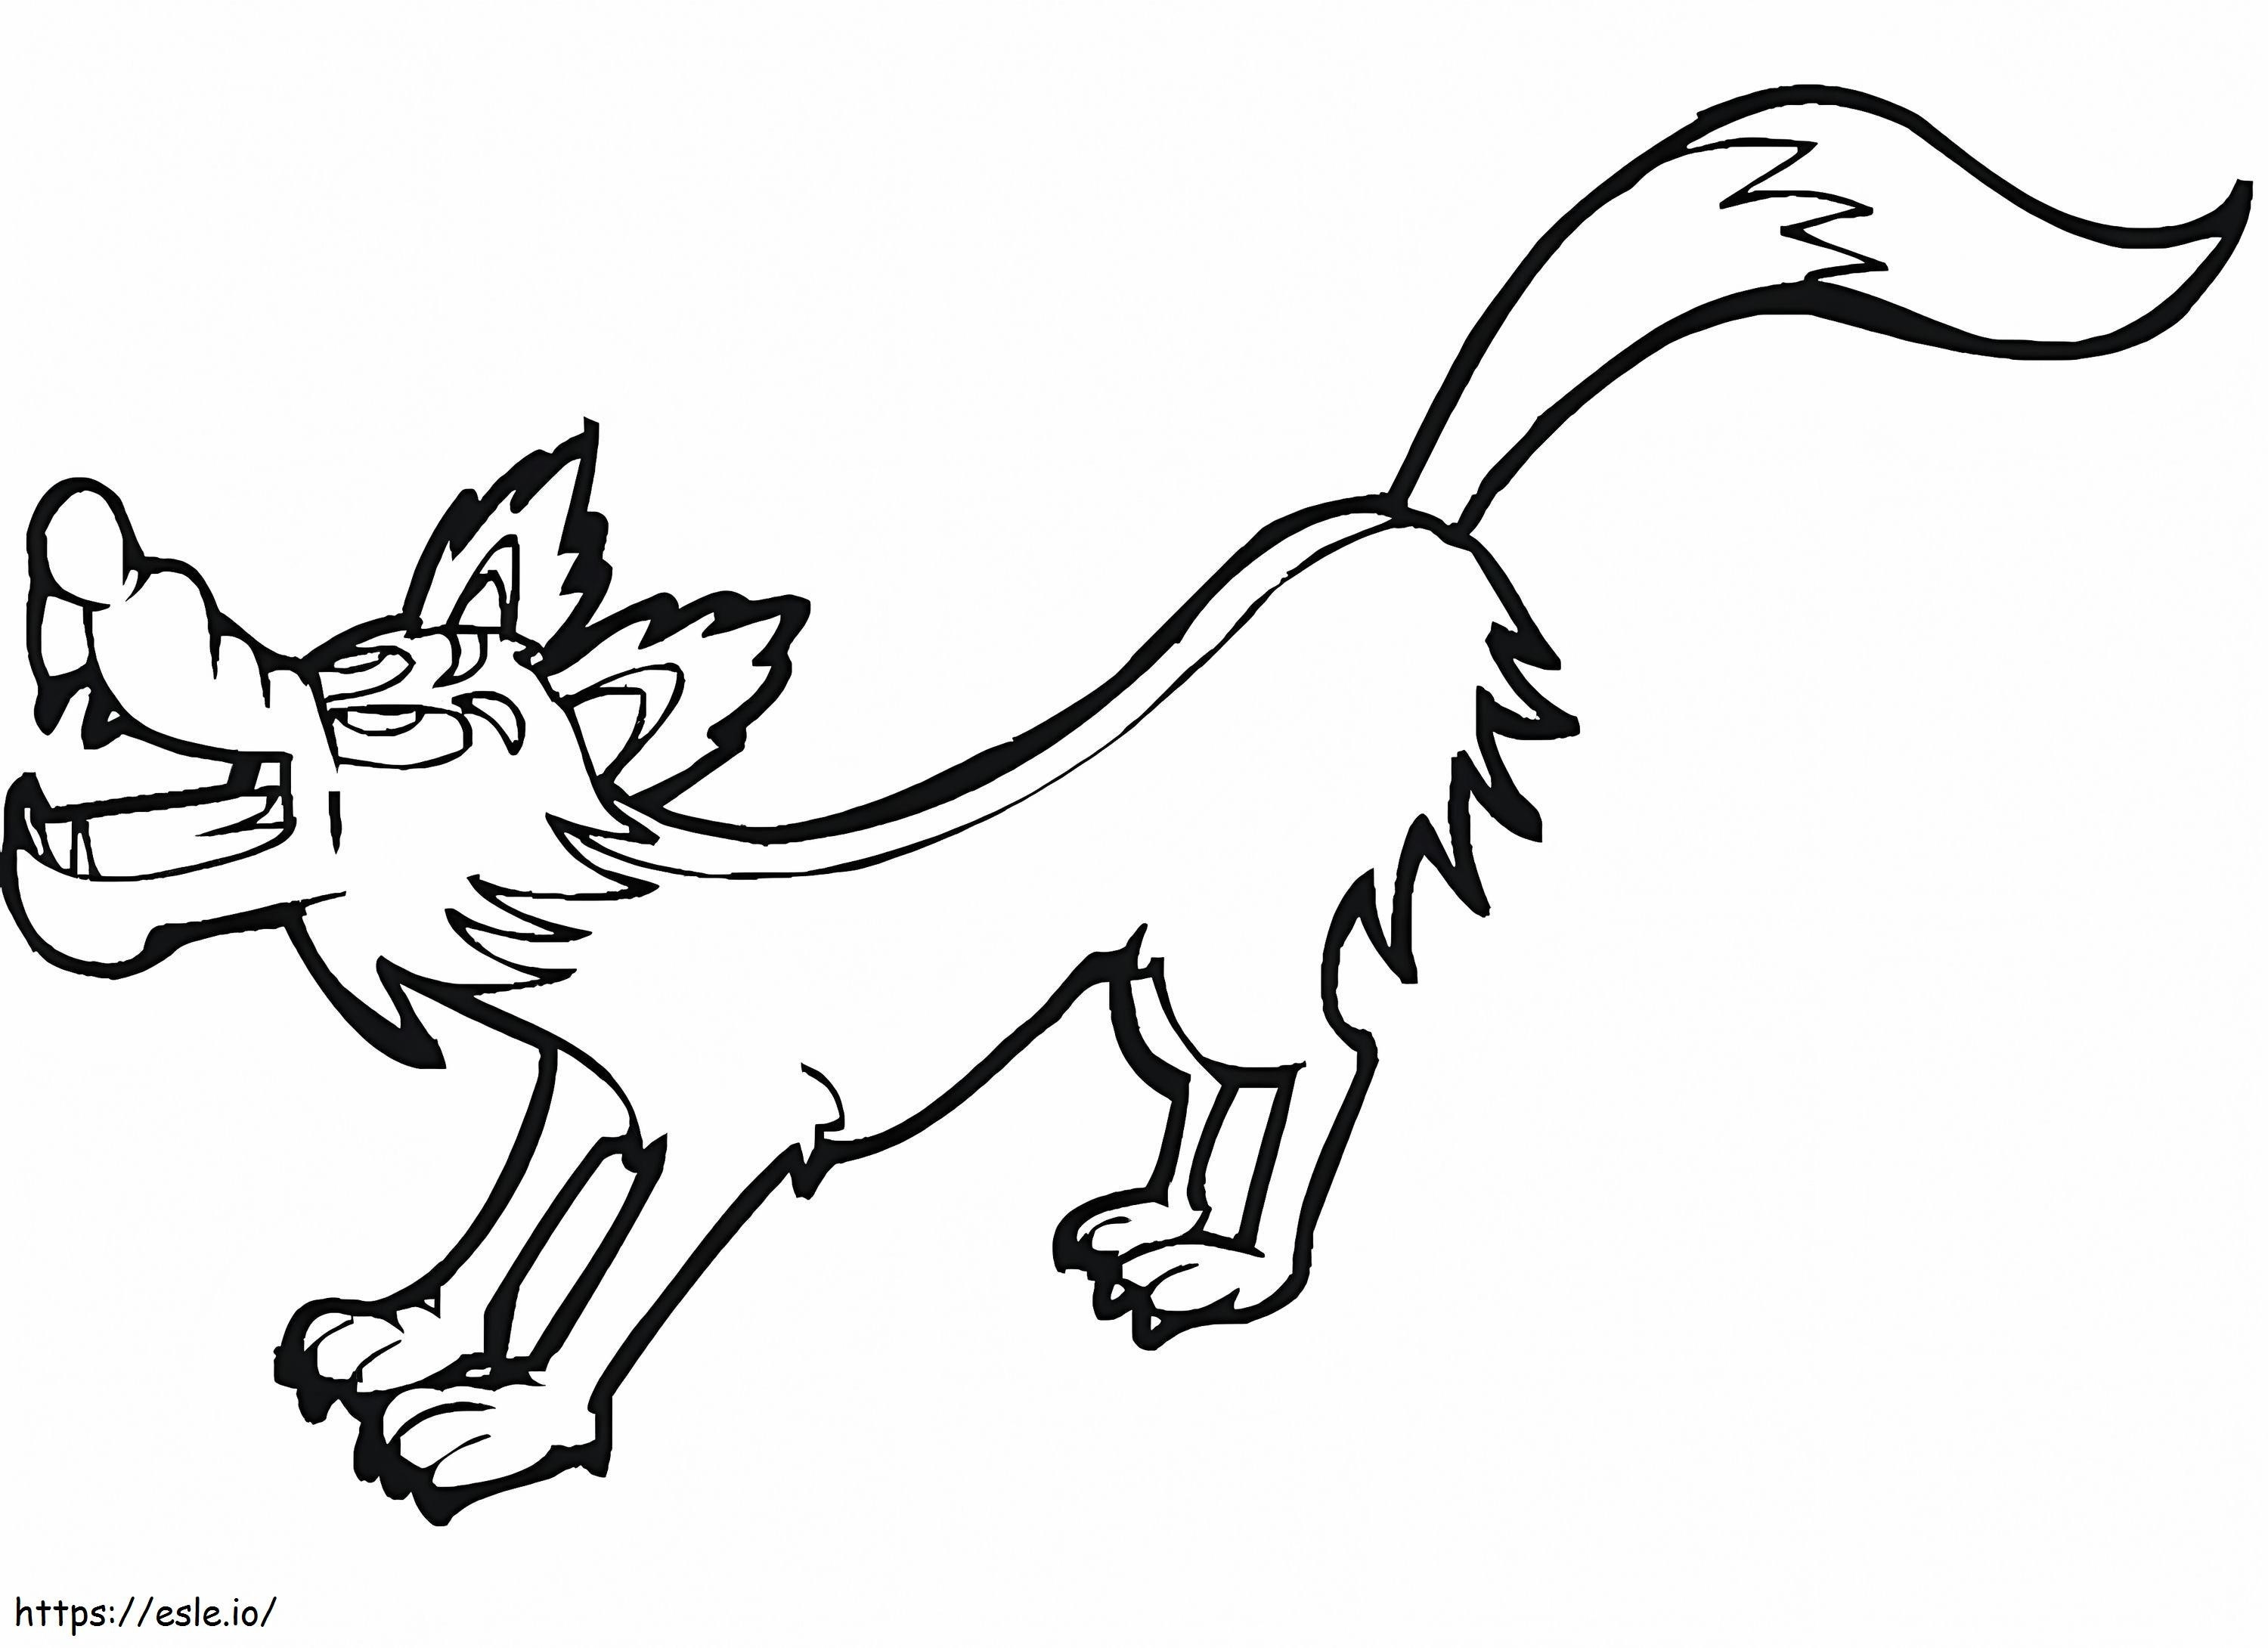 Lobo de desenho animado para colorir